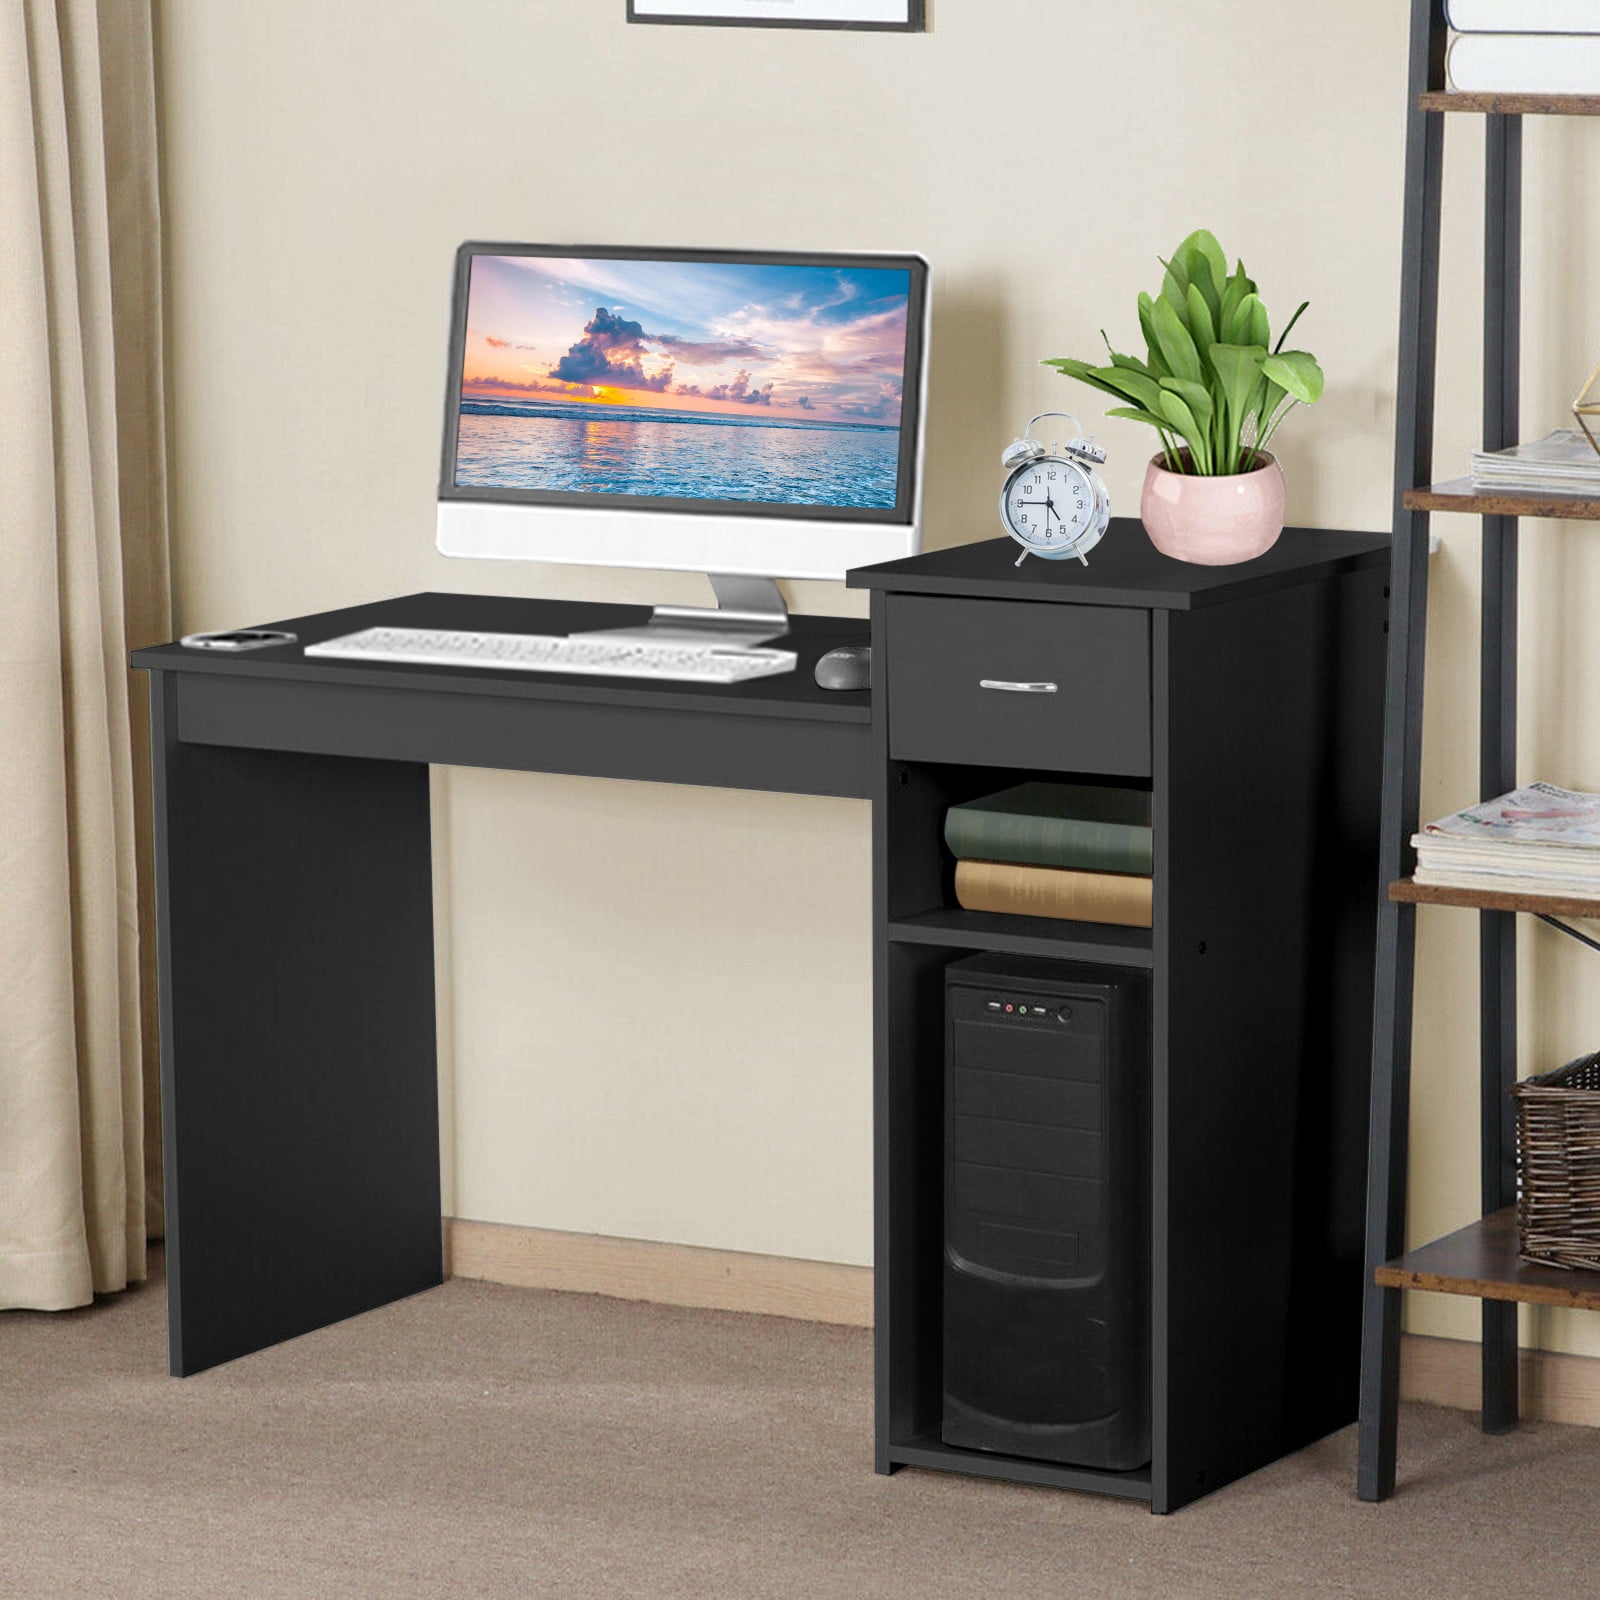 Home Desktop Computer Desk With Shelf Home Small Desk Dormitory Study Table 